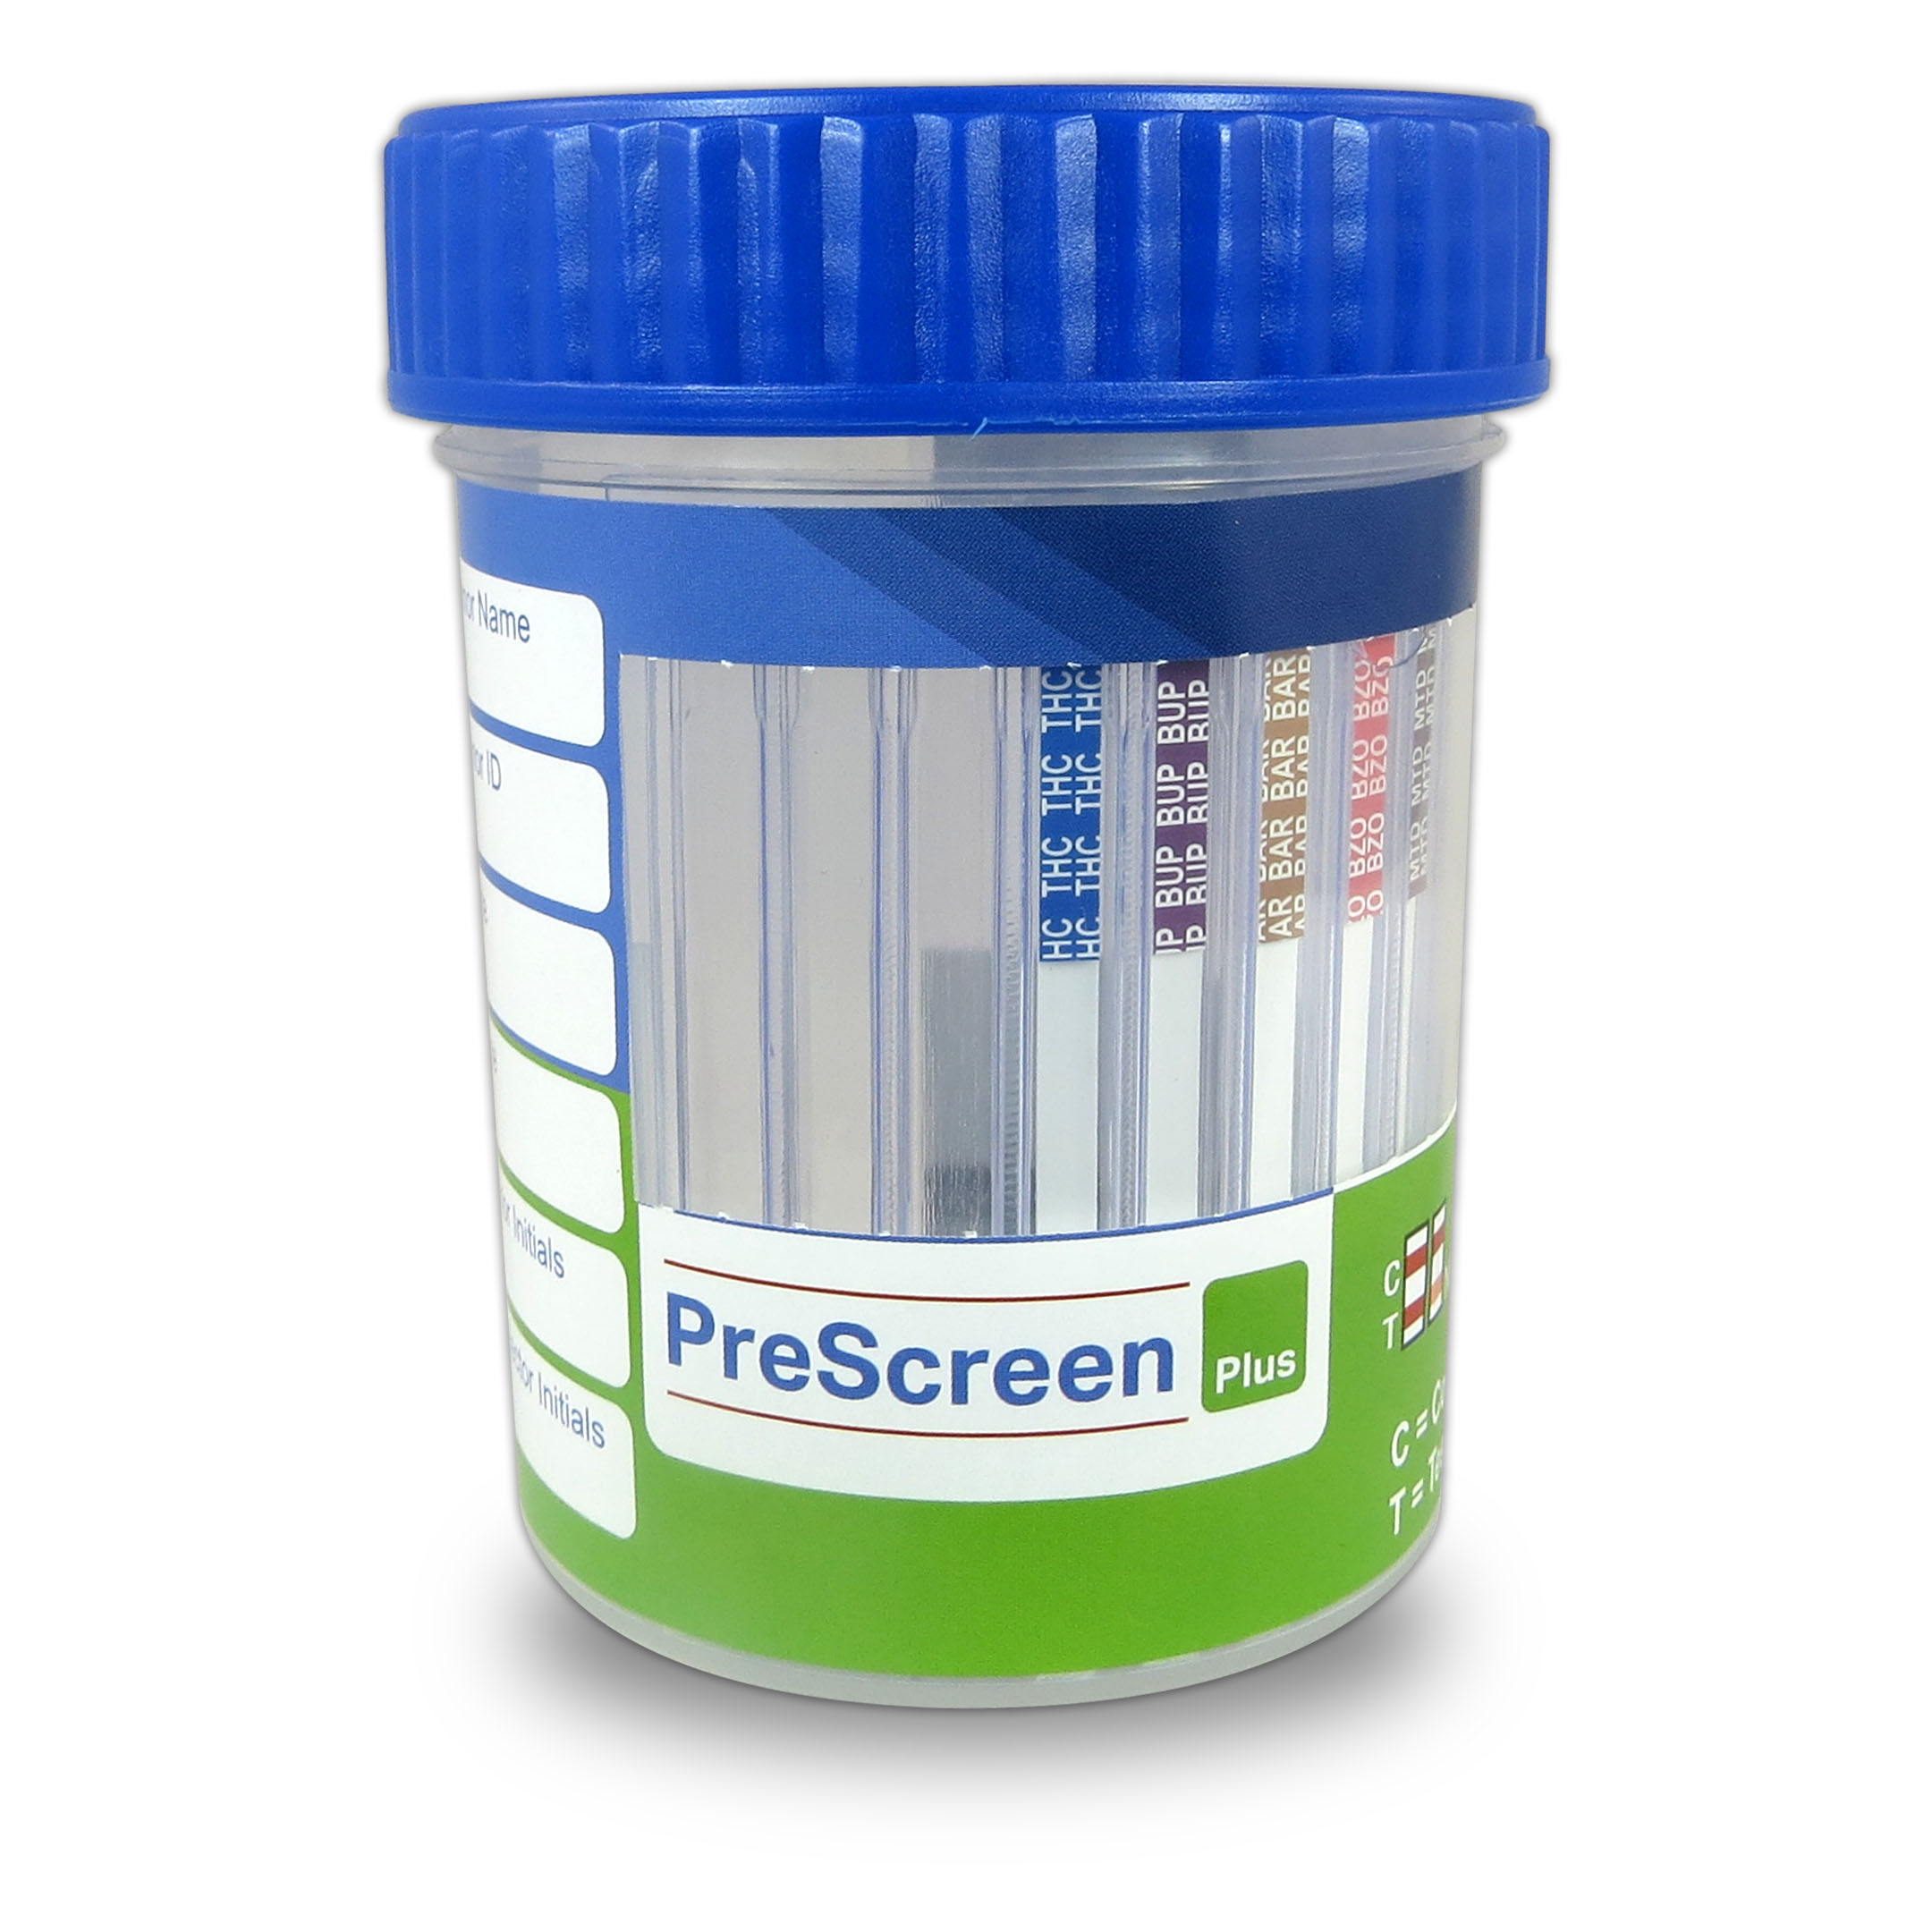 five-panel-prescreen-plus-drug-test-clia-waived